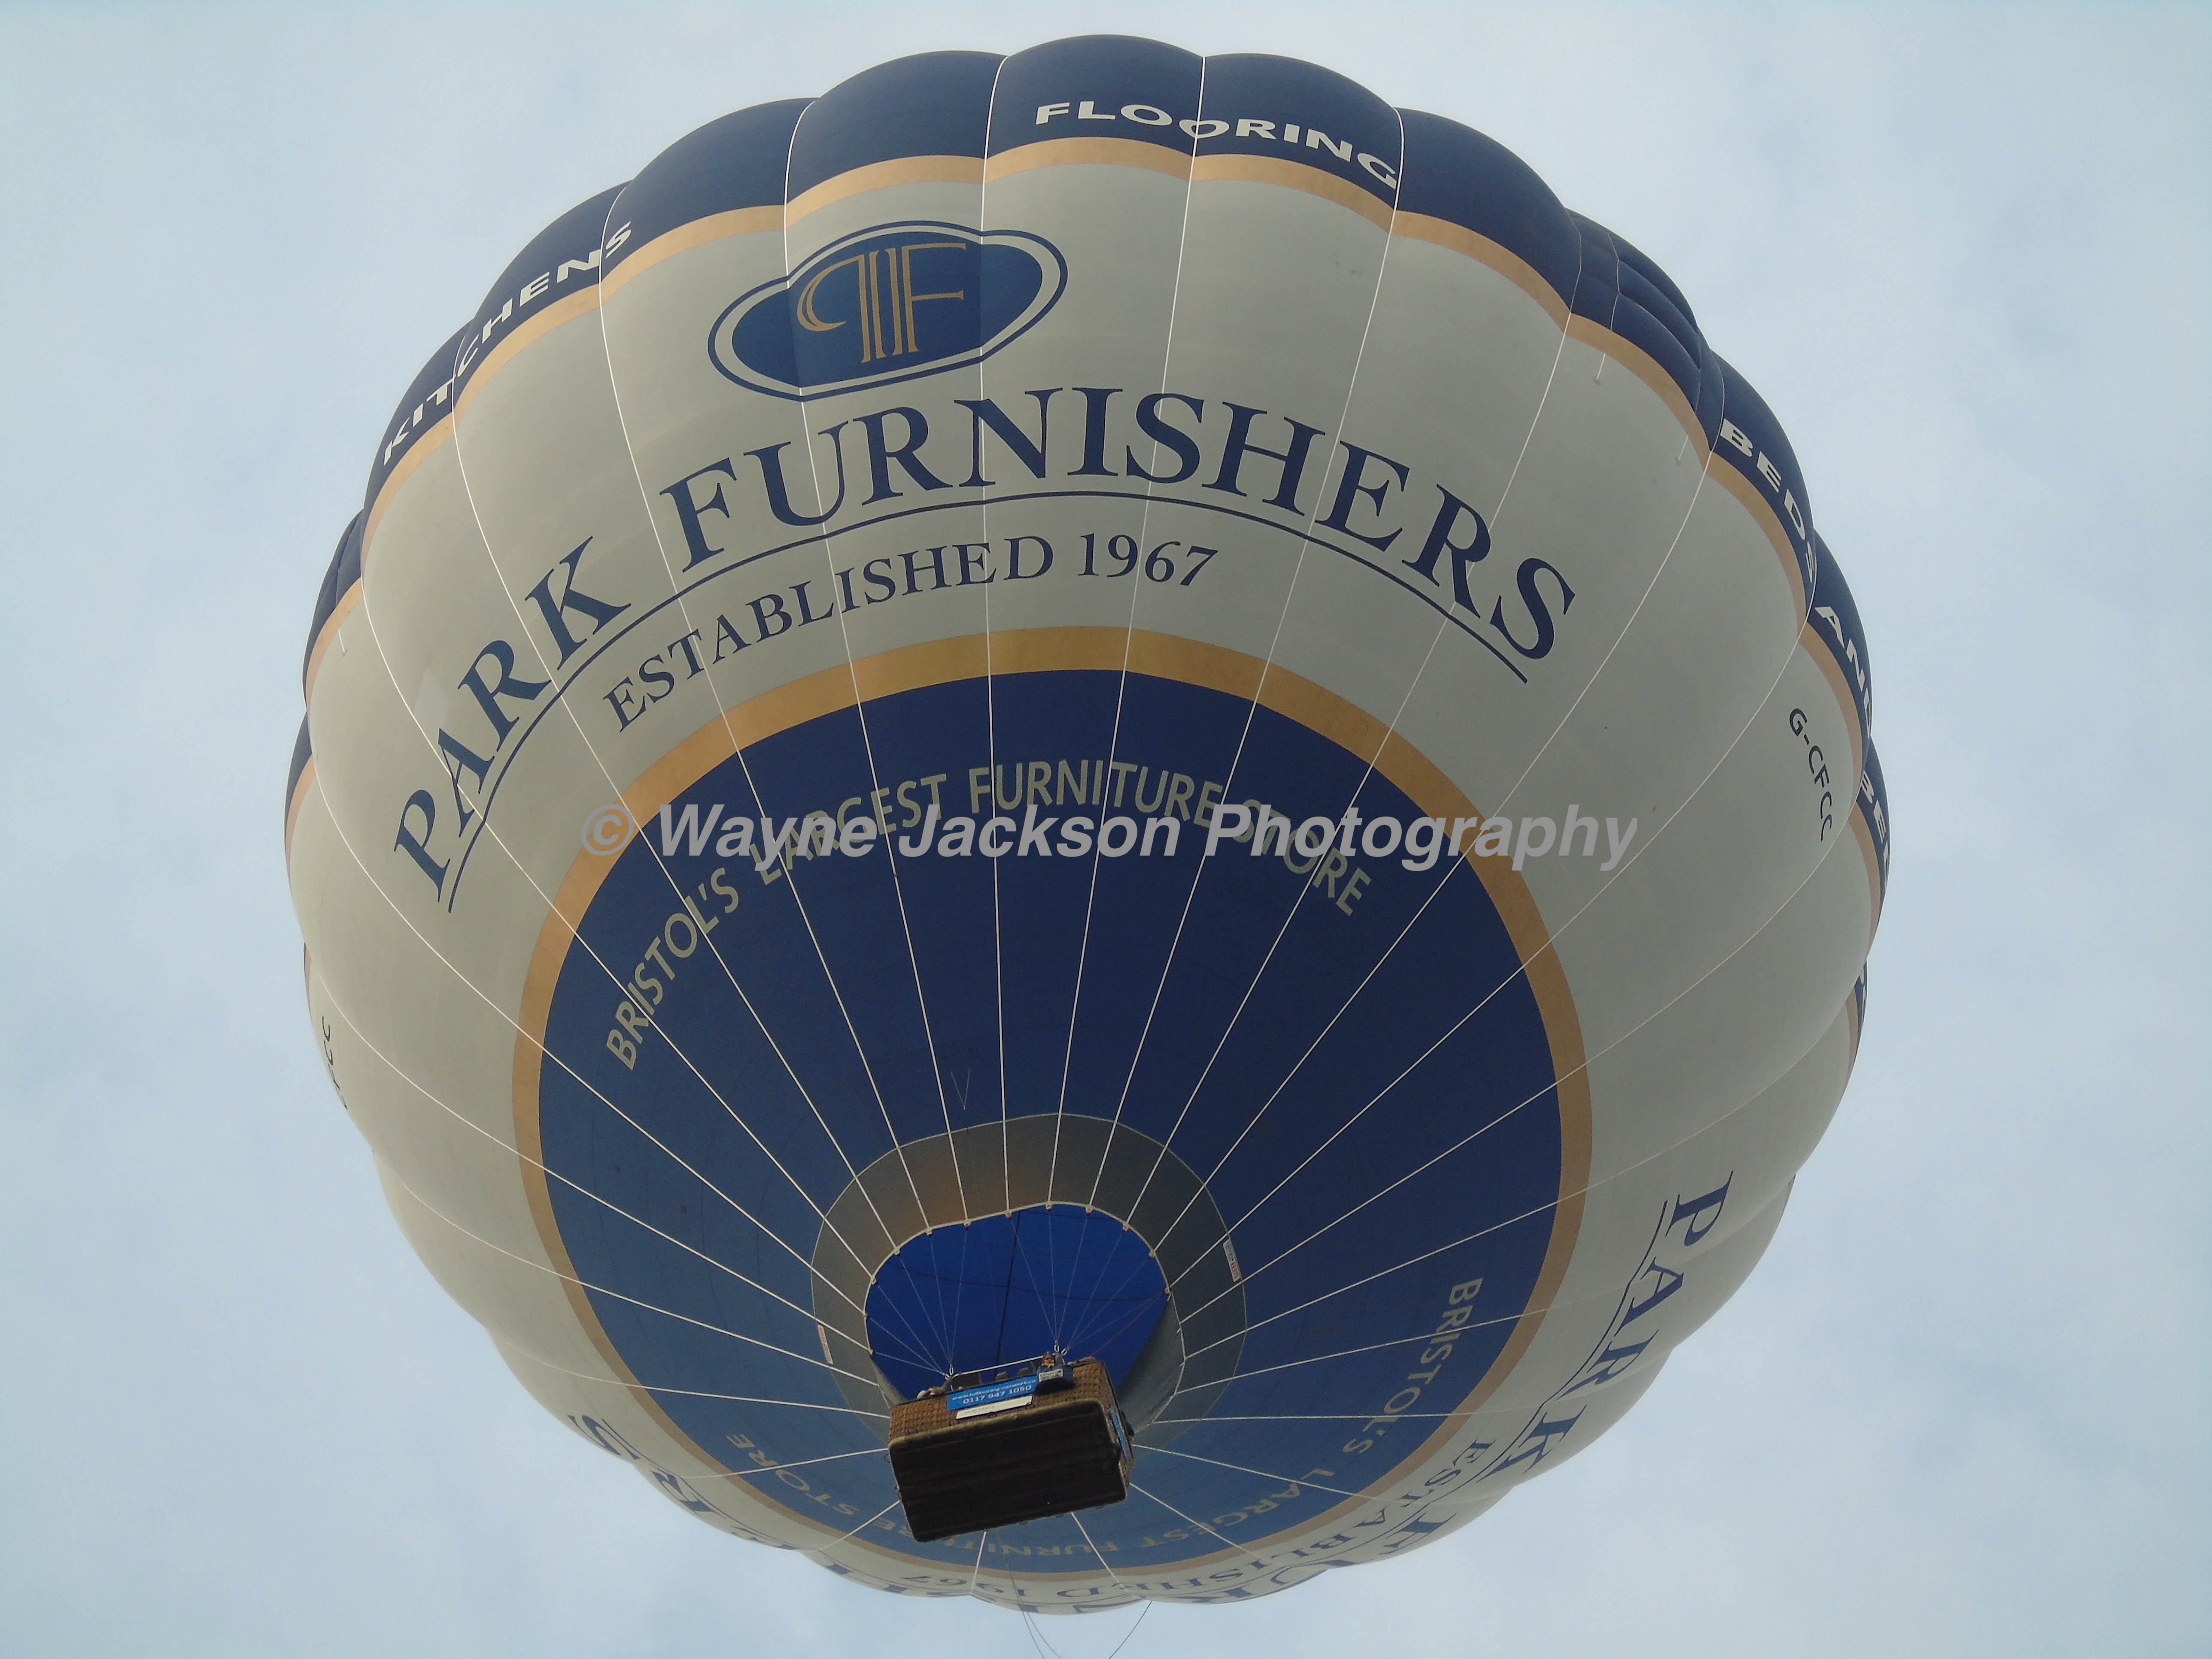 Park Furnishers hot air balloon - Bristol Balloon Fiesta